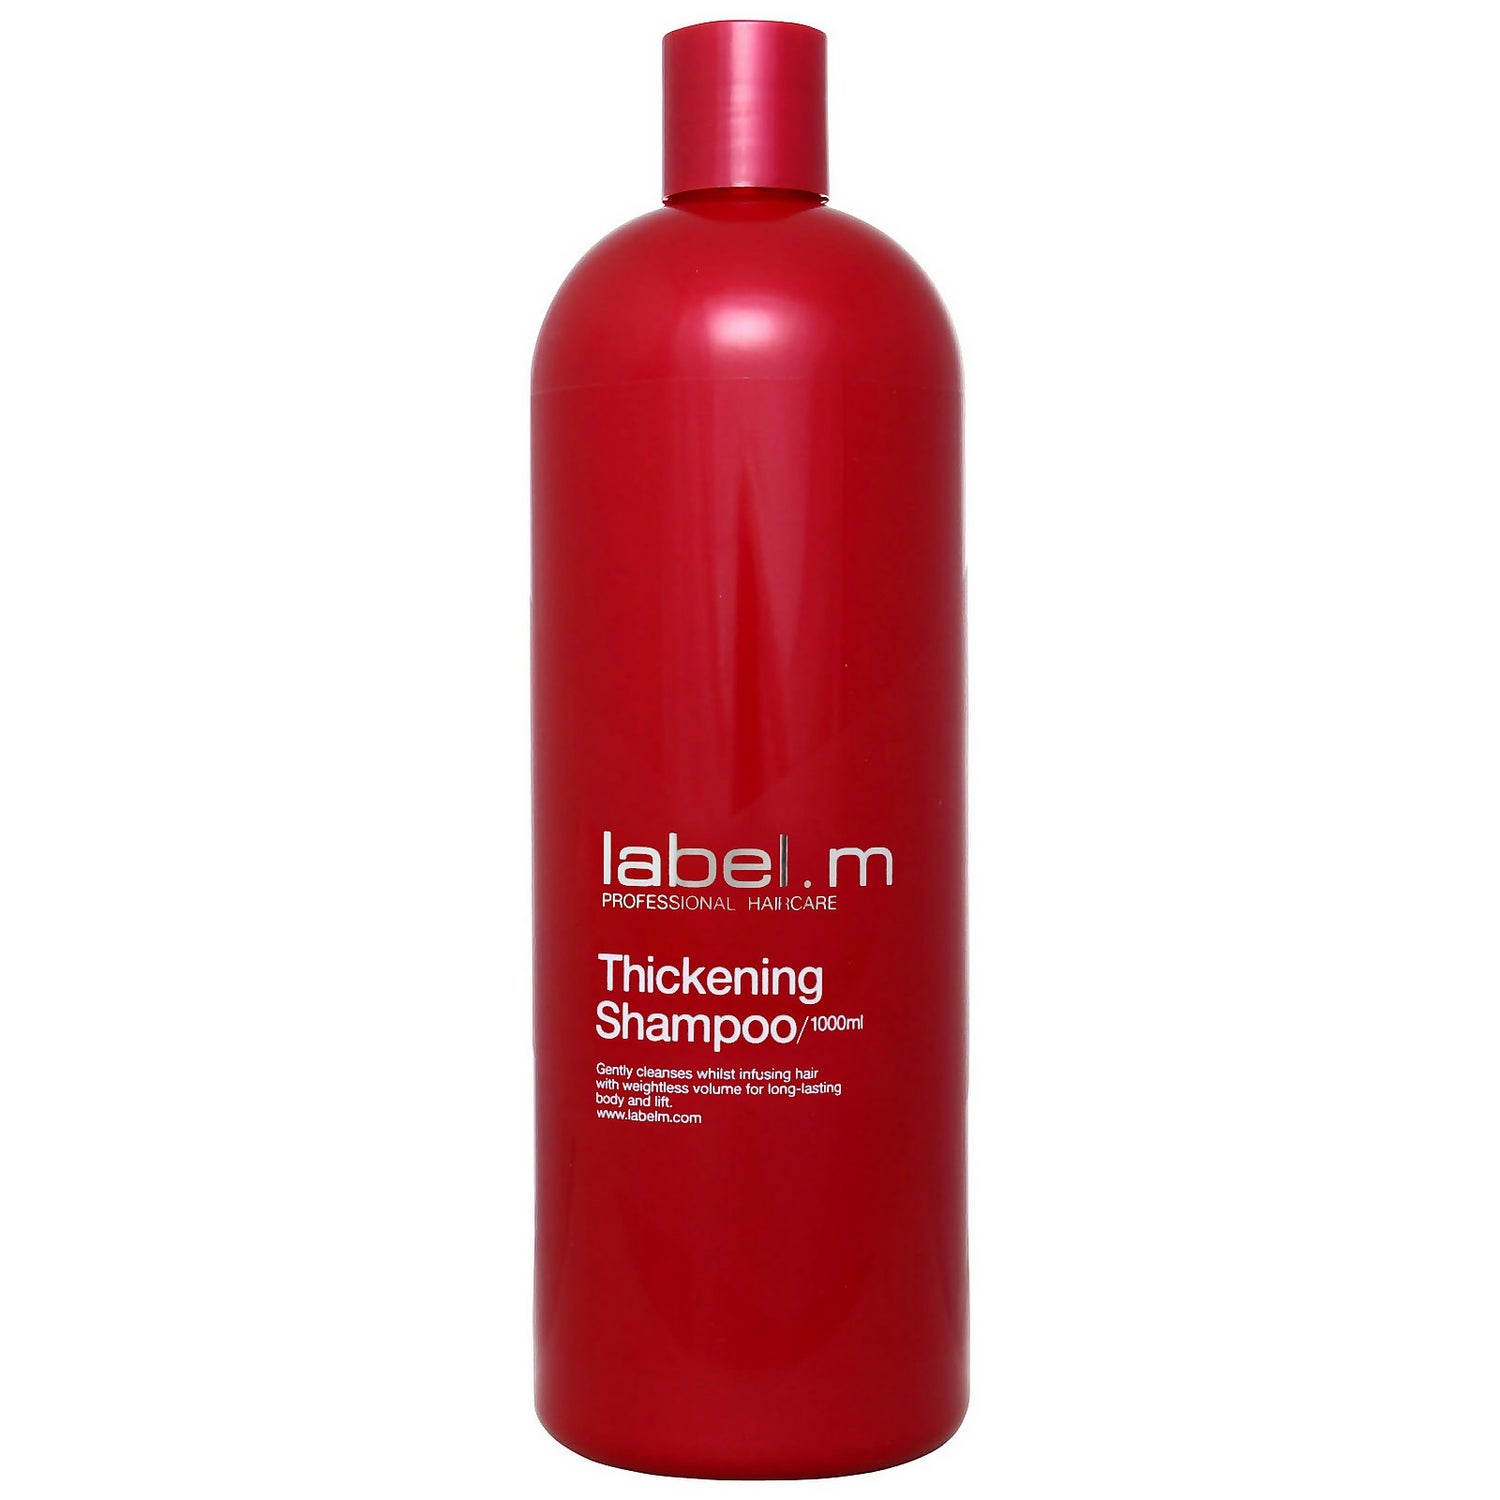 slave Beskæftiget Seneste nyt label.m Cleanse Thickening Shampoo 1000ml - allbeauty